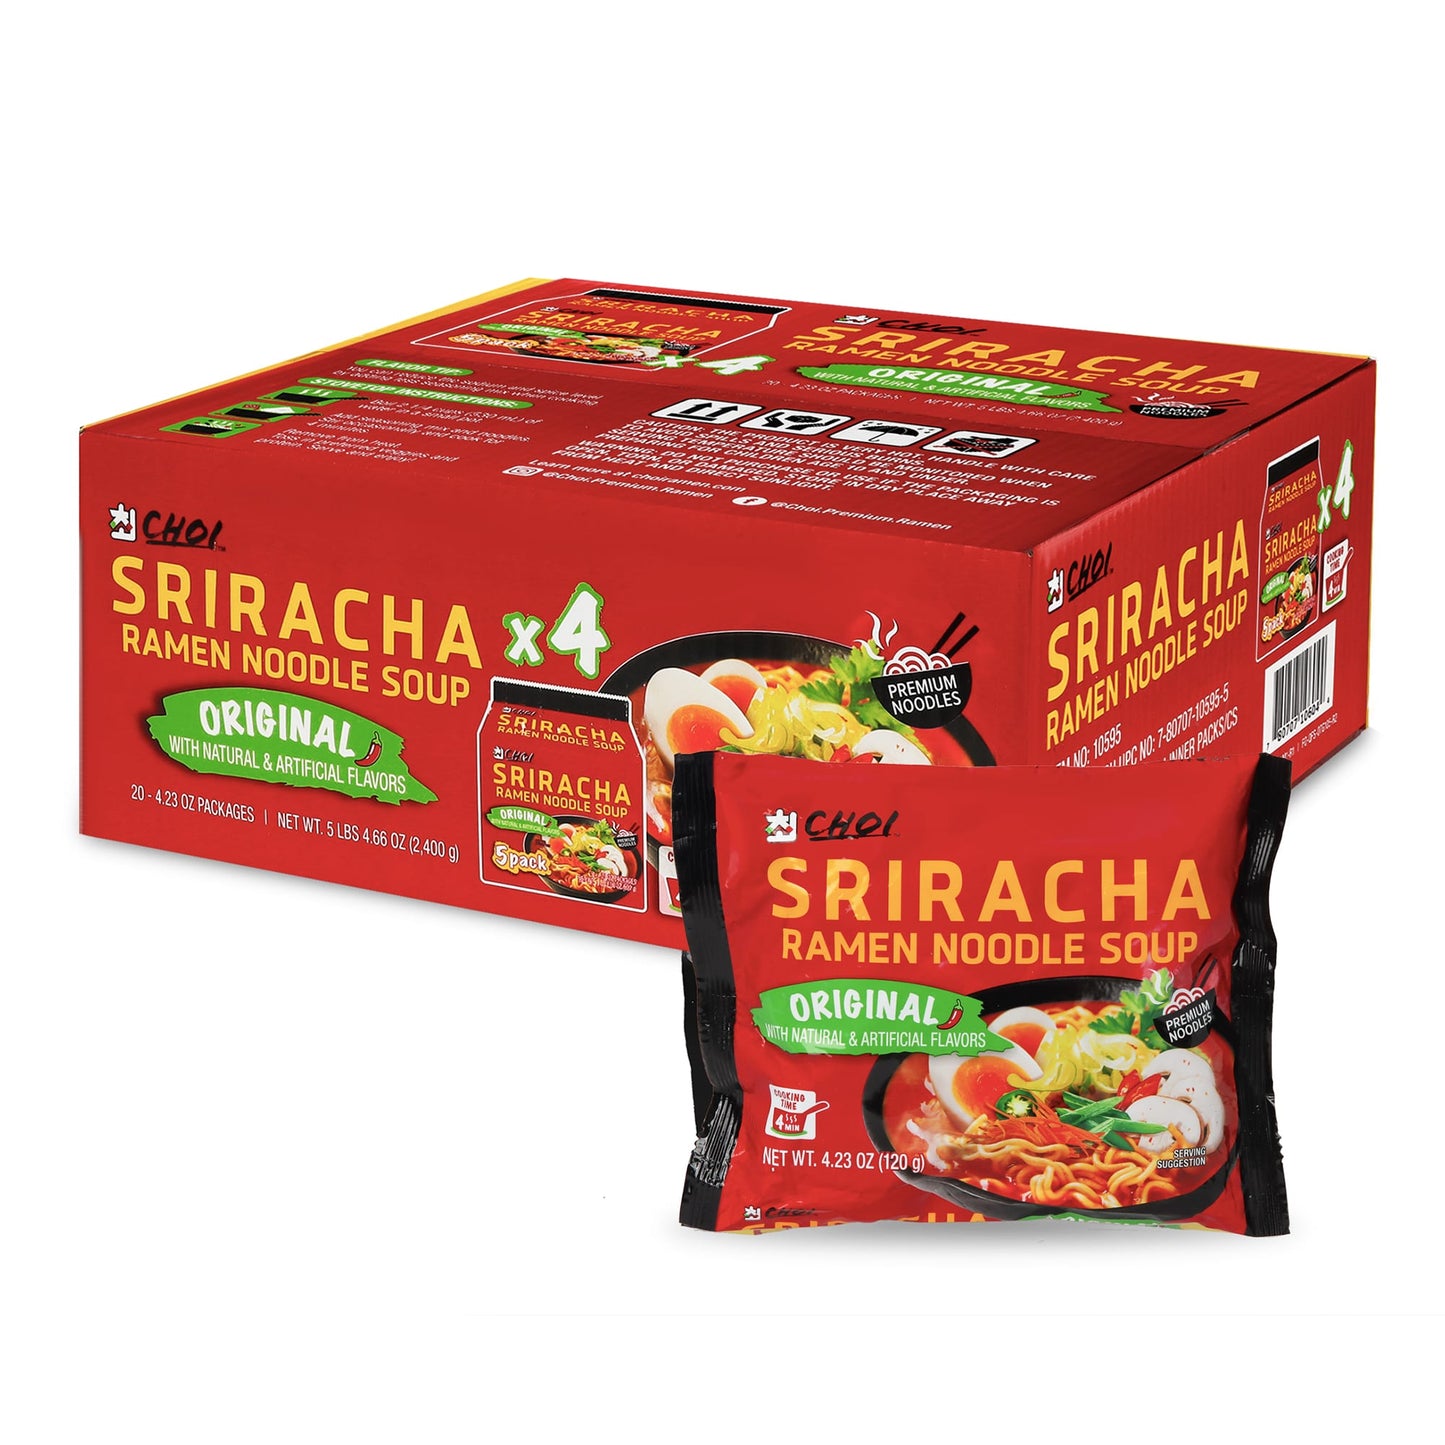 Choi Sriracha Ramen Original 120g Pouch (20-pack)